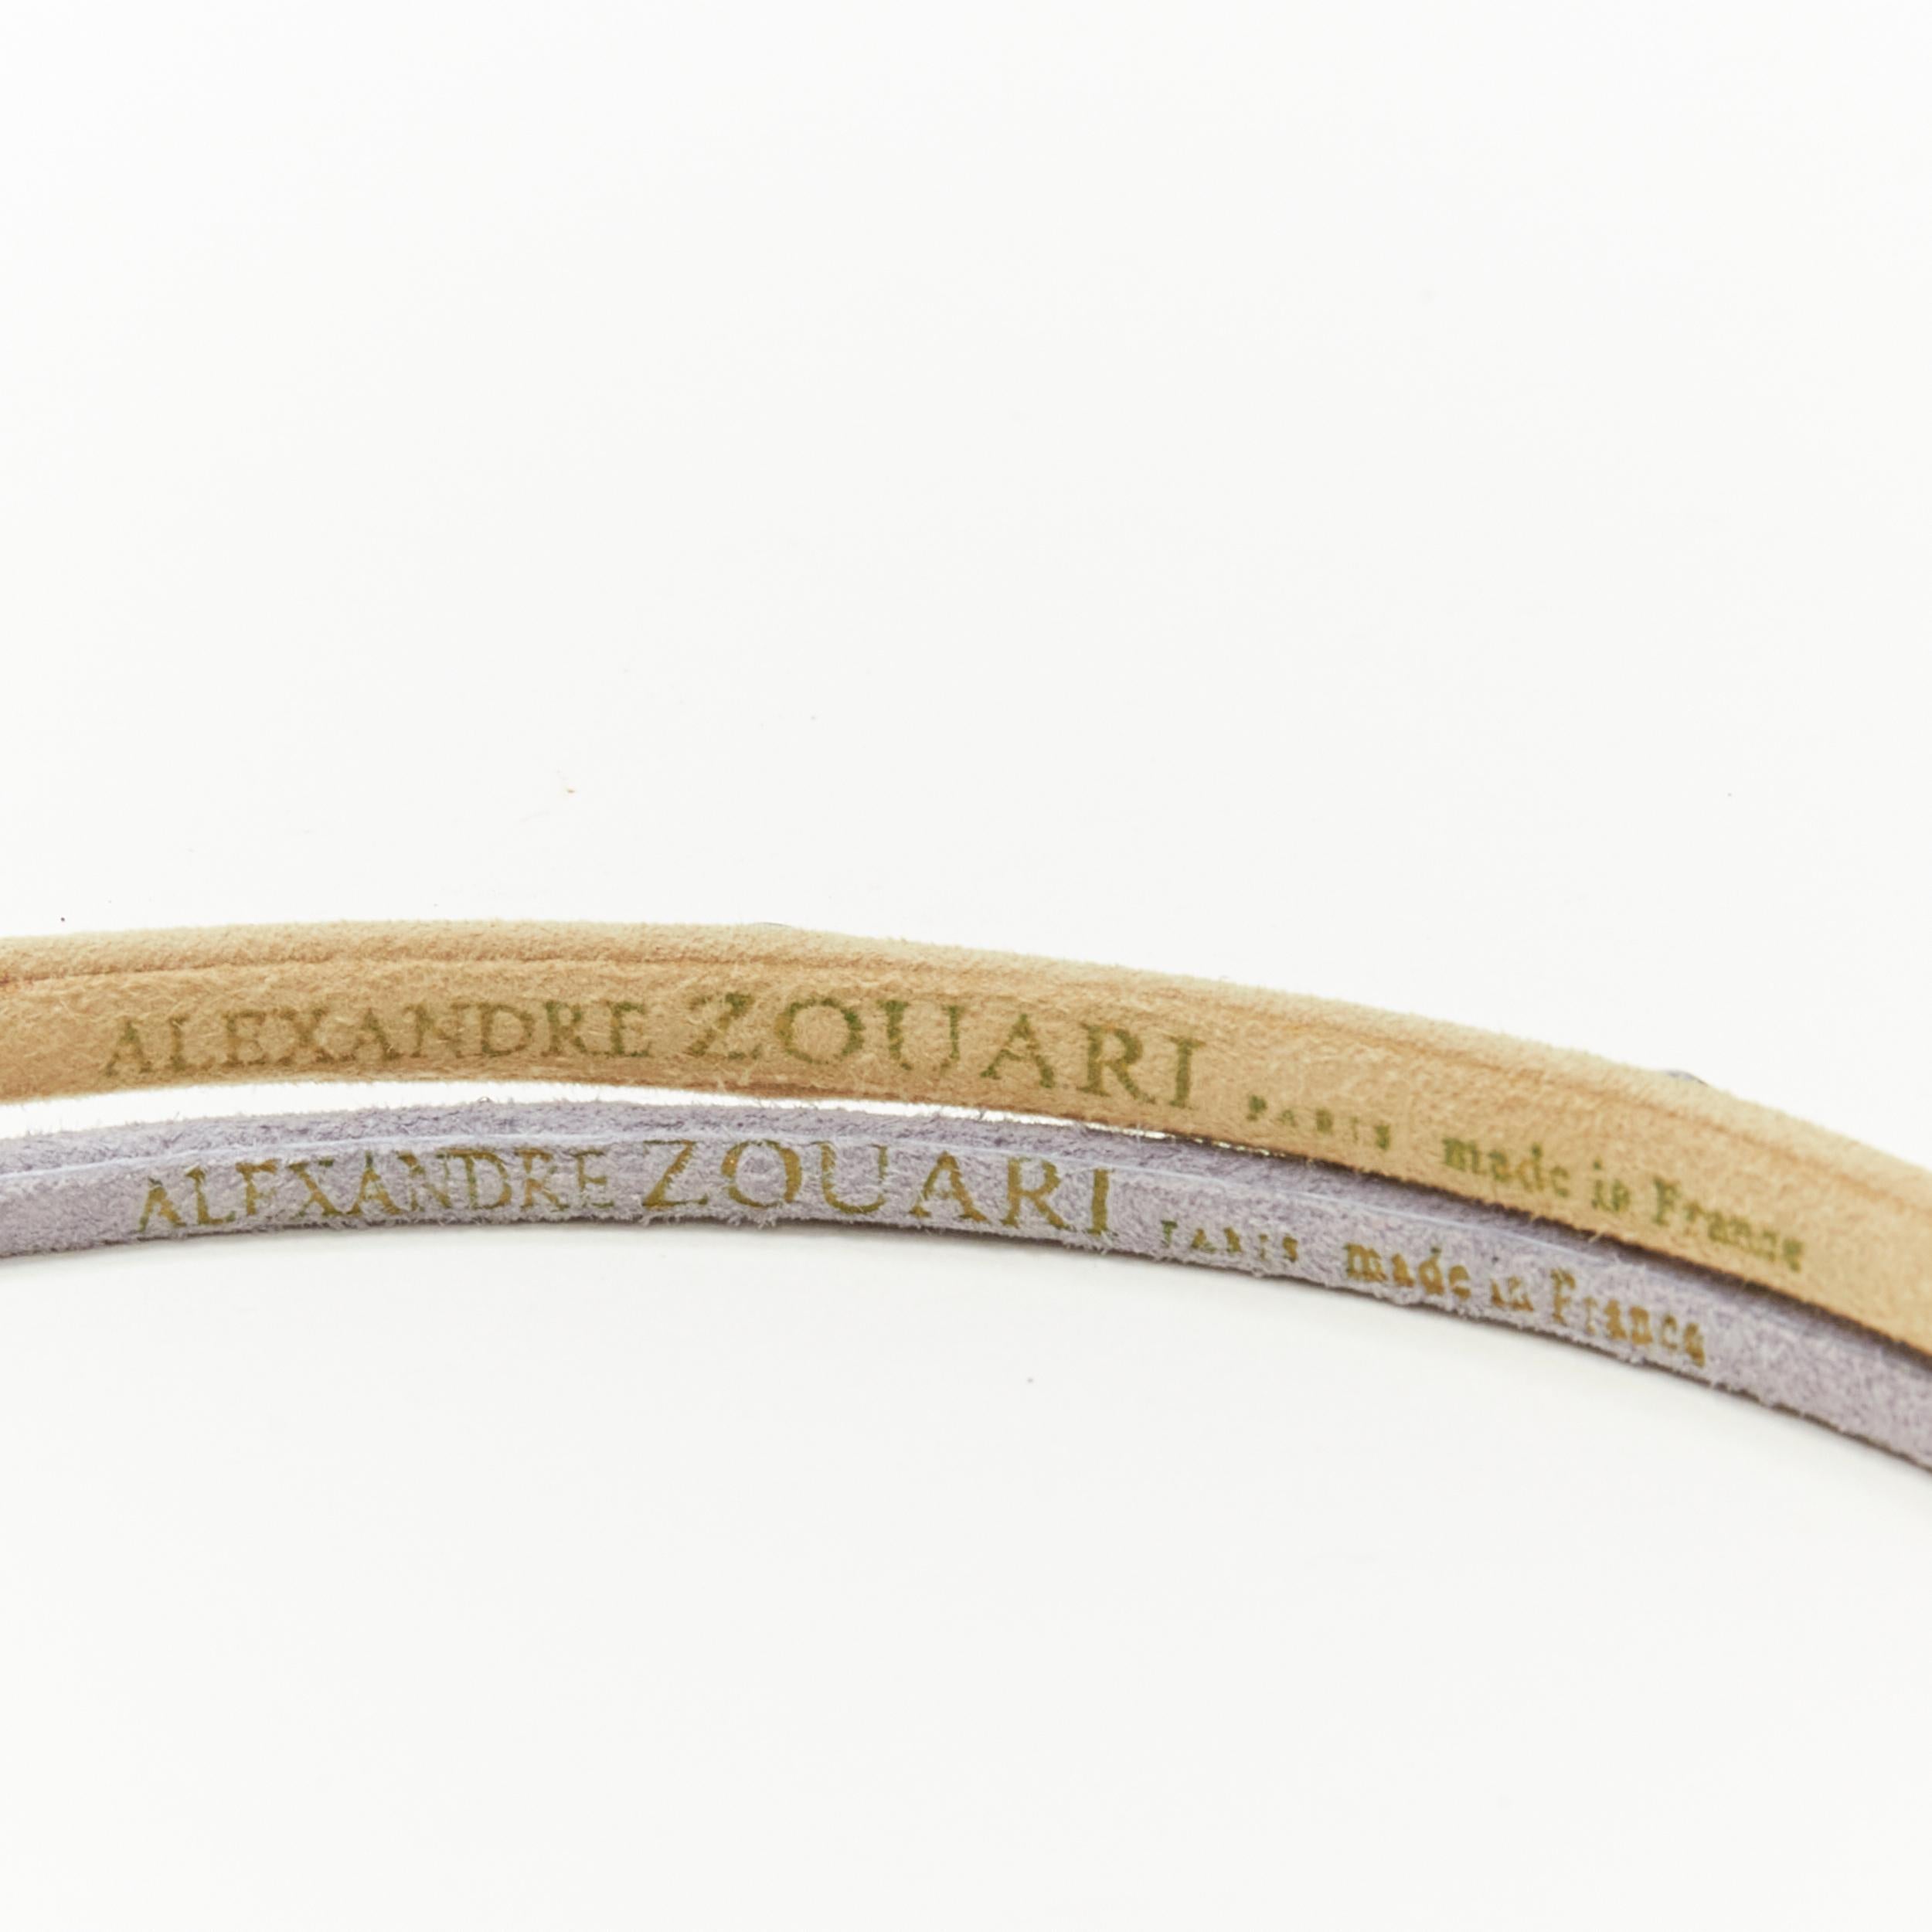 Women's ALEXANDRE ZOUARI beige grey suede colorful rhinestone skinny headband X2 For Sale